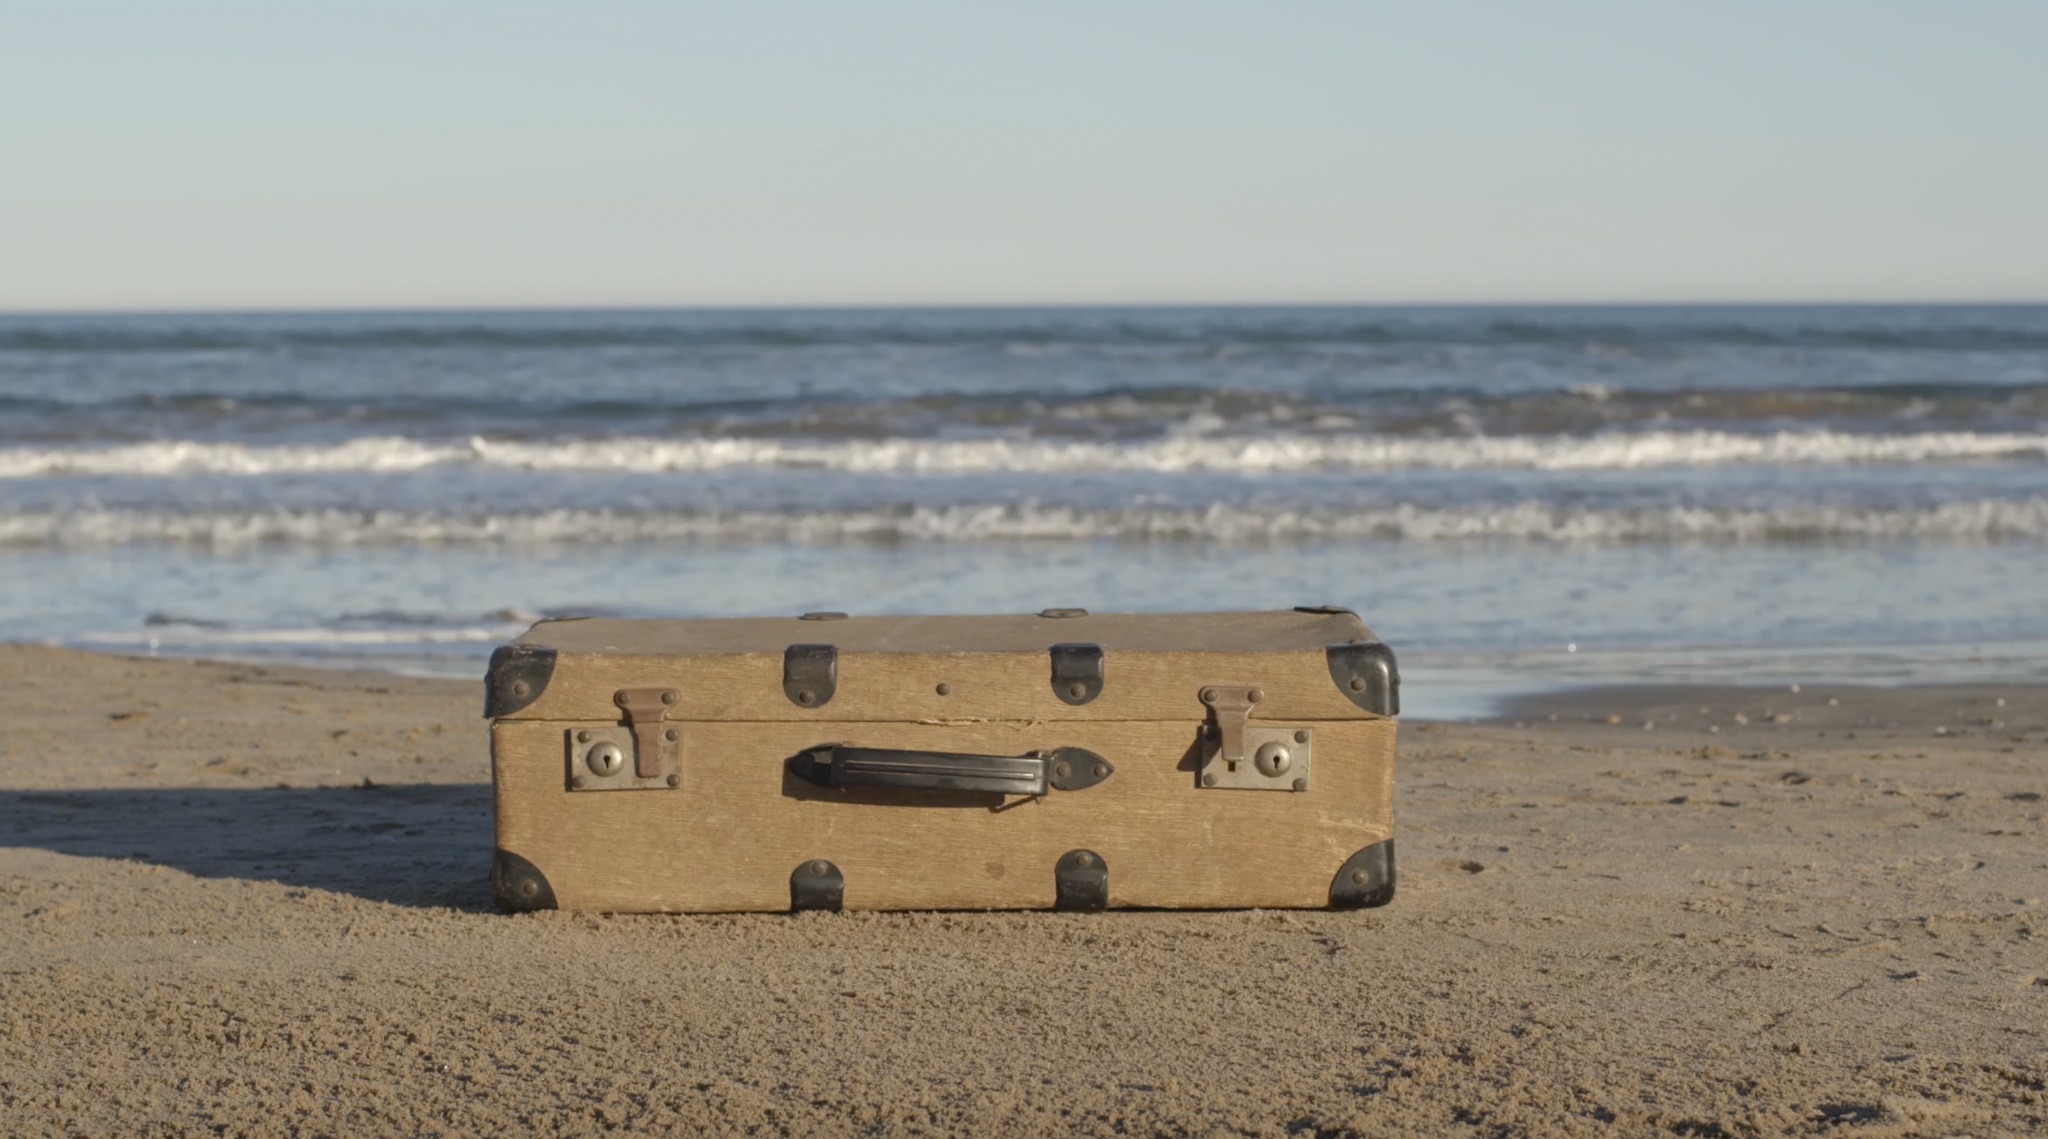 maleta en la playa en el documental Exilis